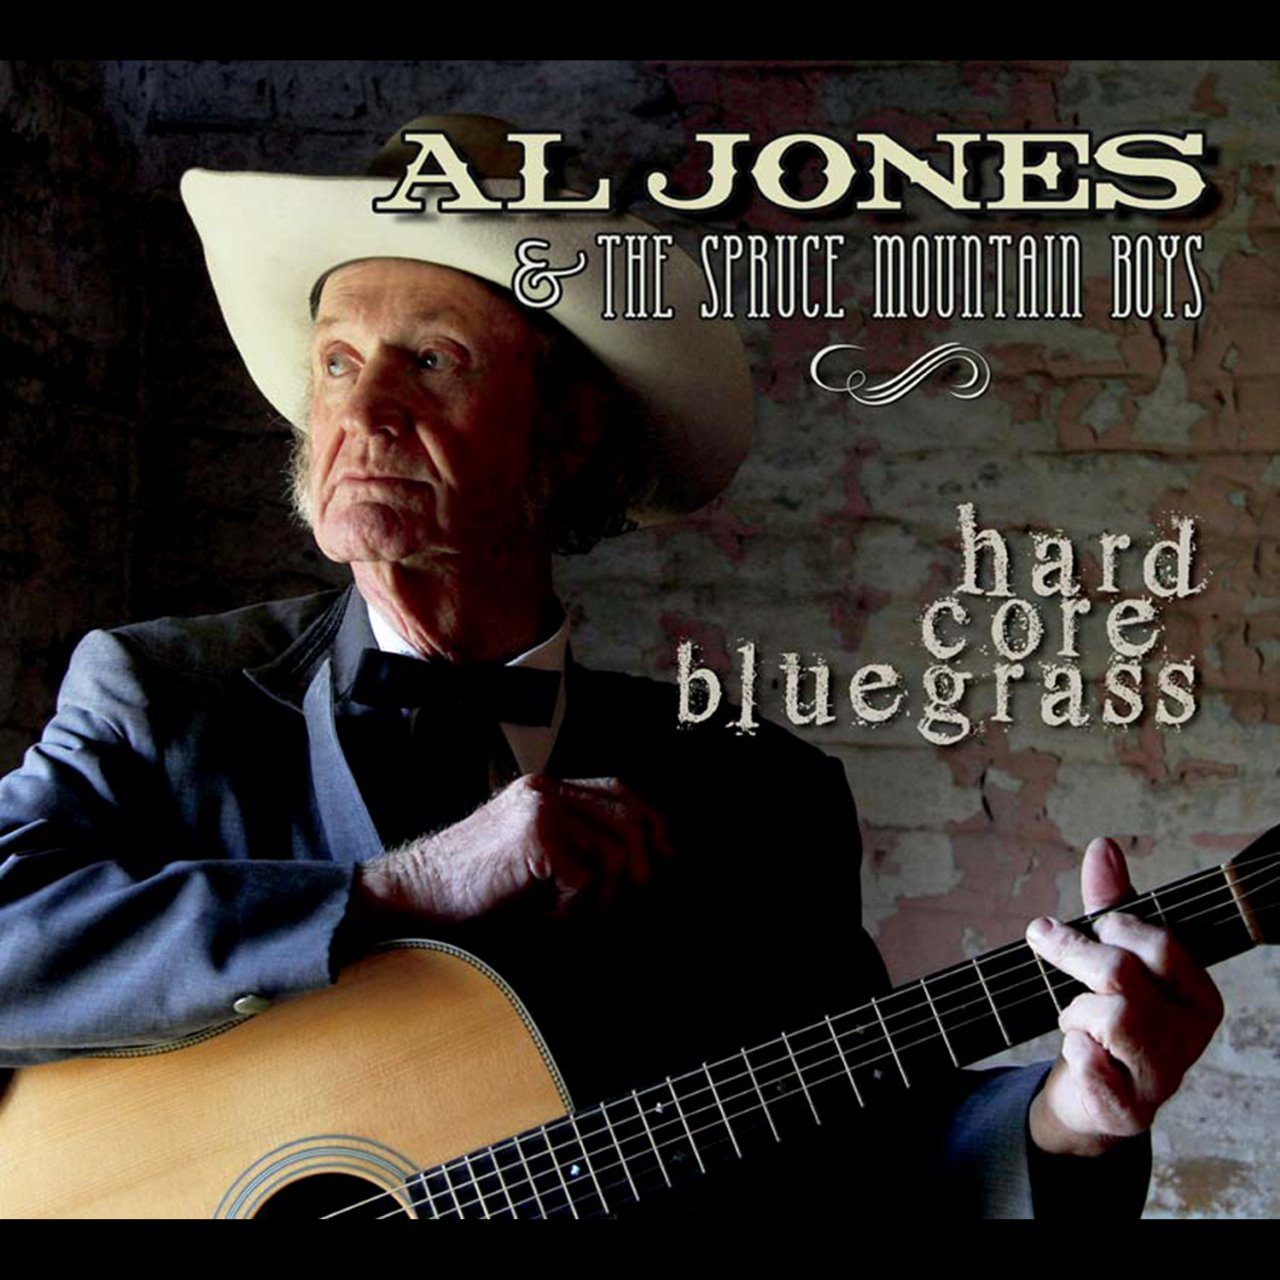 Al Jones